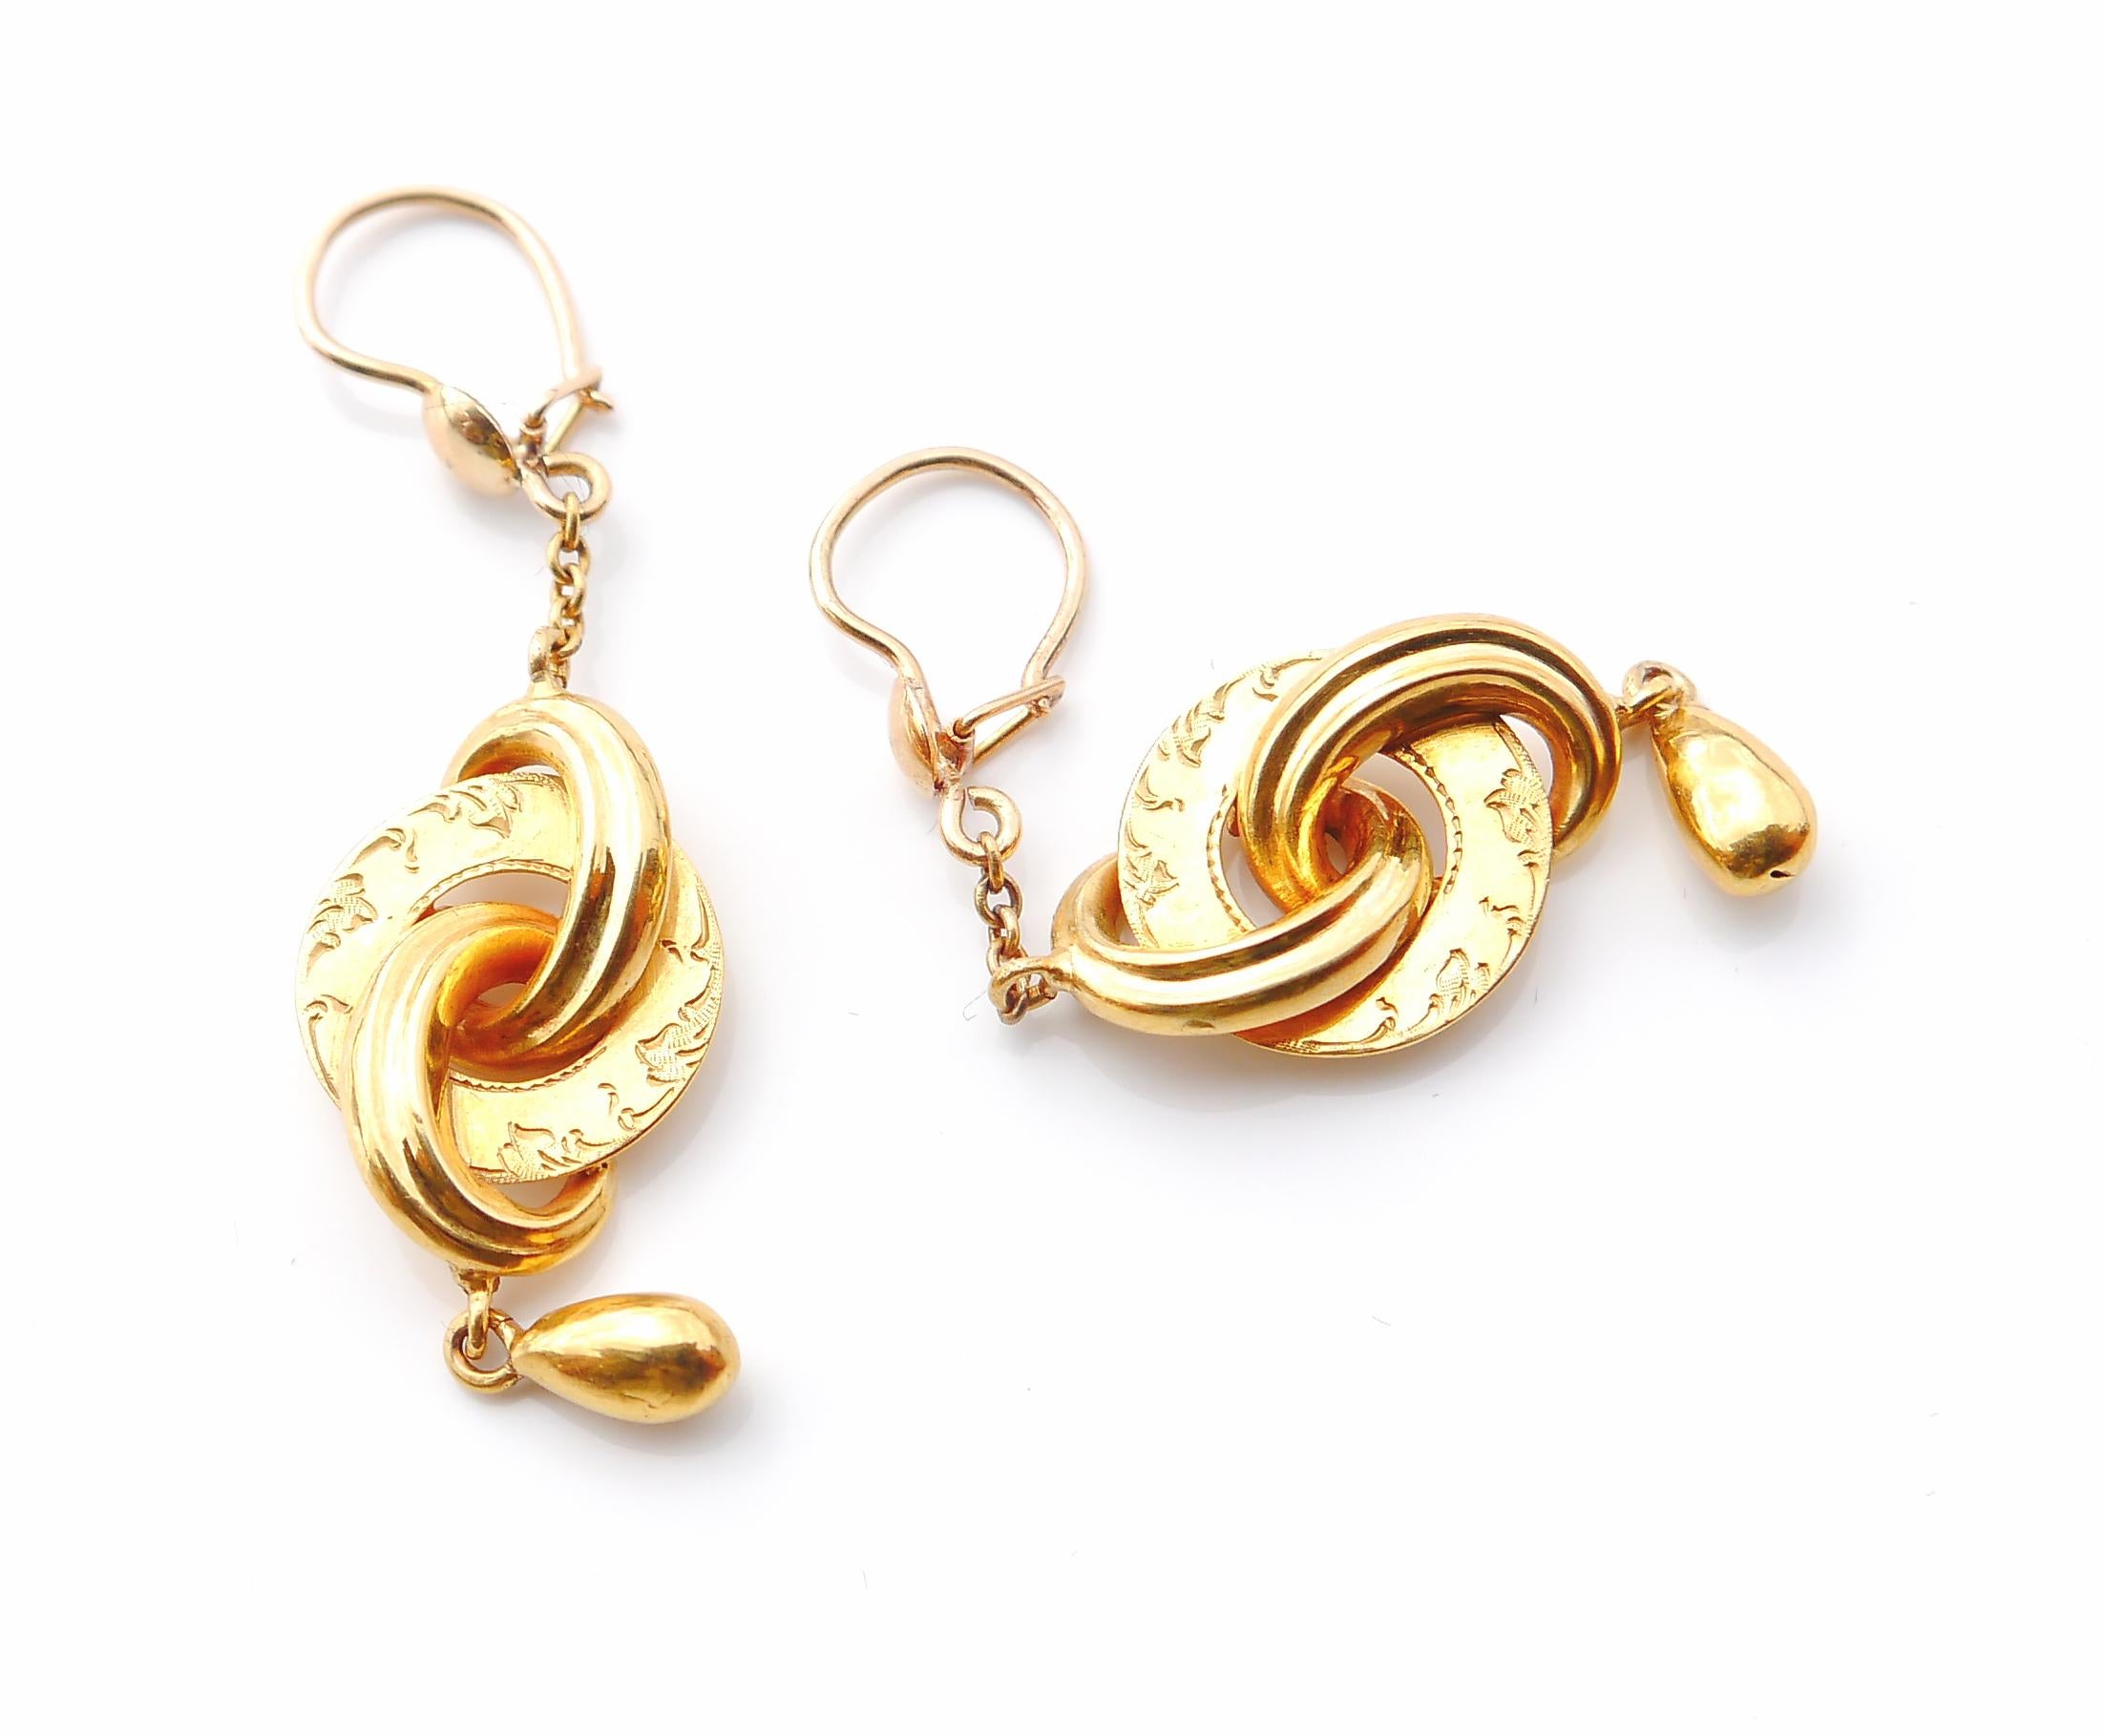 Antique European Knots Earrings solid 18K Gold / 5.1gr For Sale 1